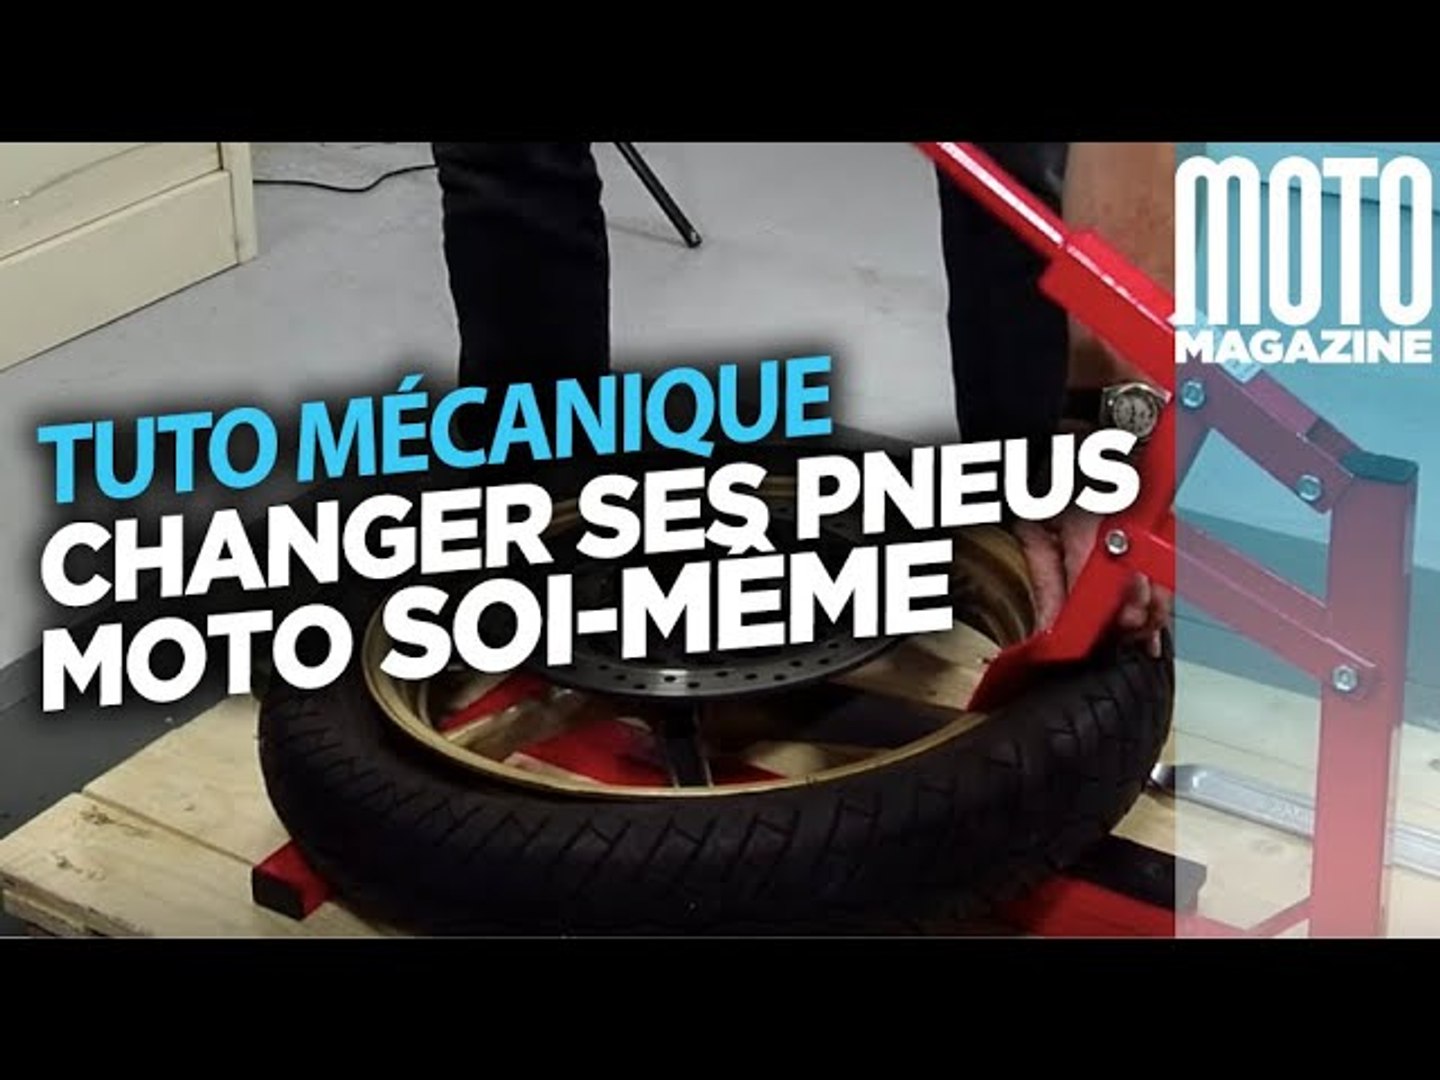 Changer ses pneus moto - Tuto Moto Magazine - Vidéo Dailymotion